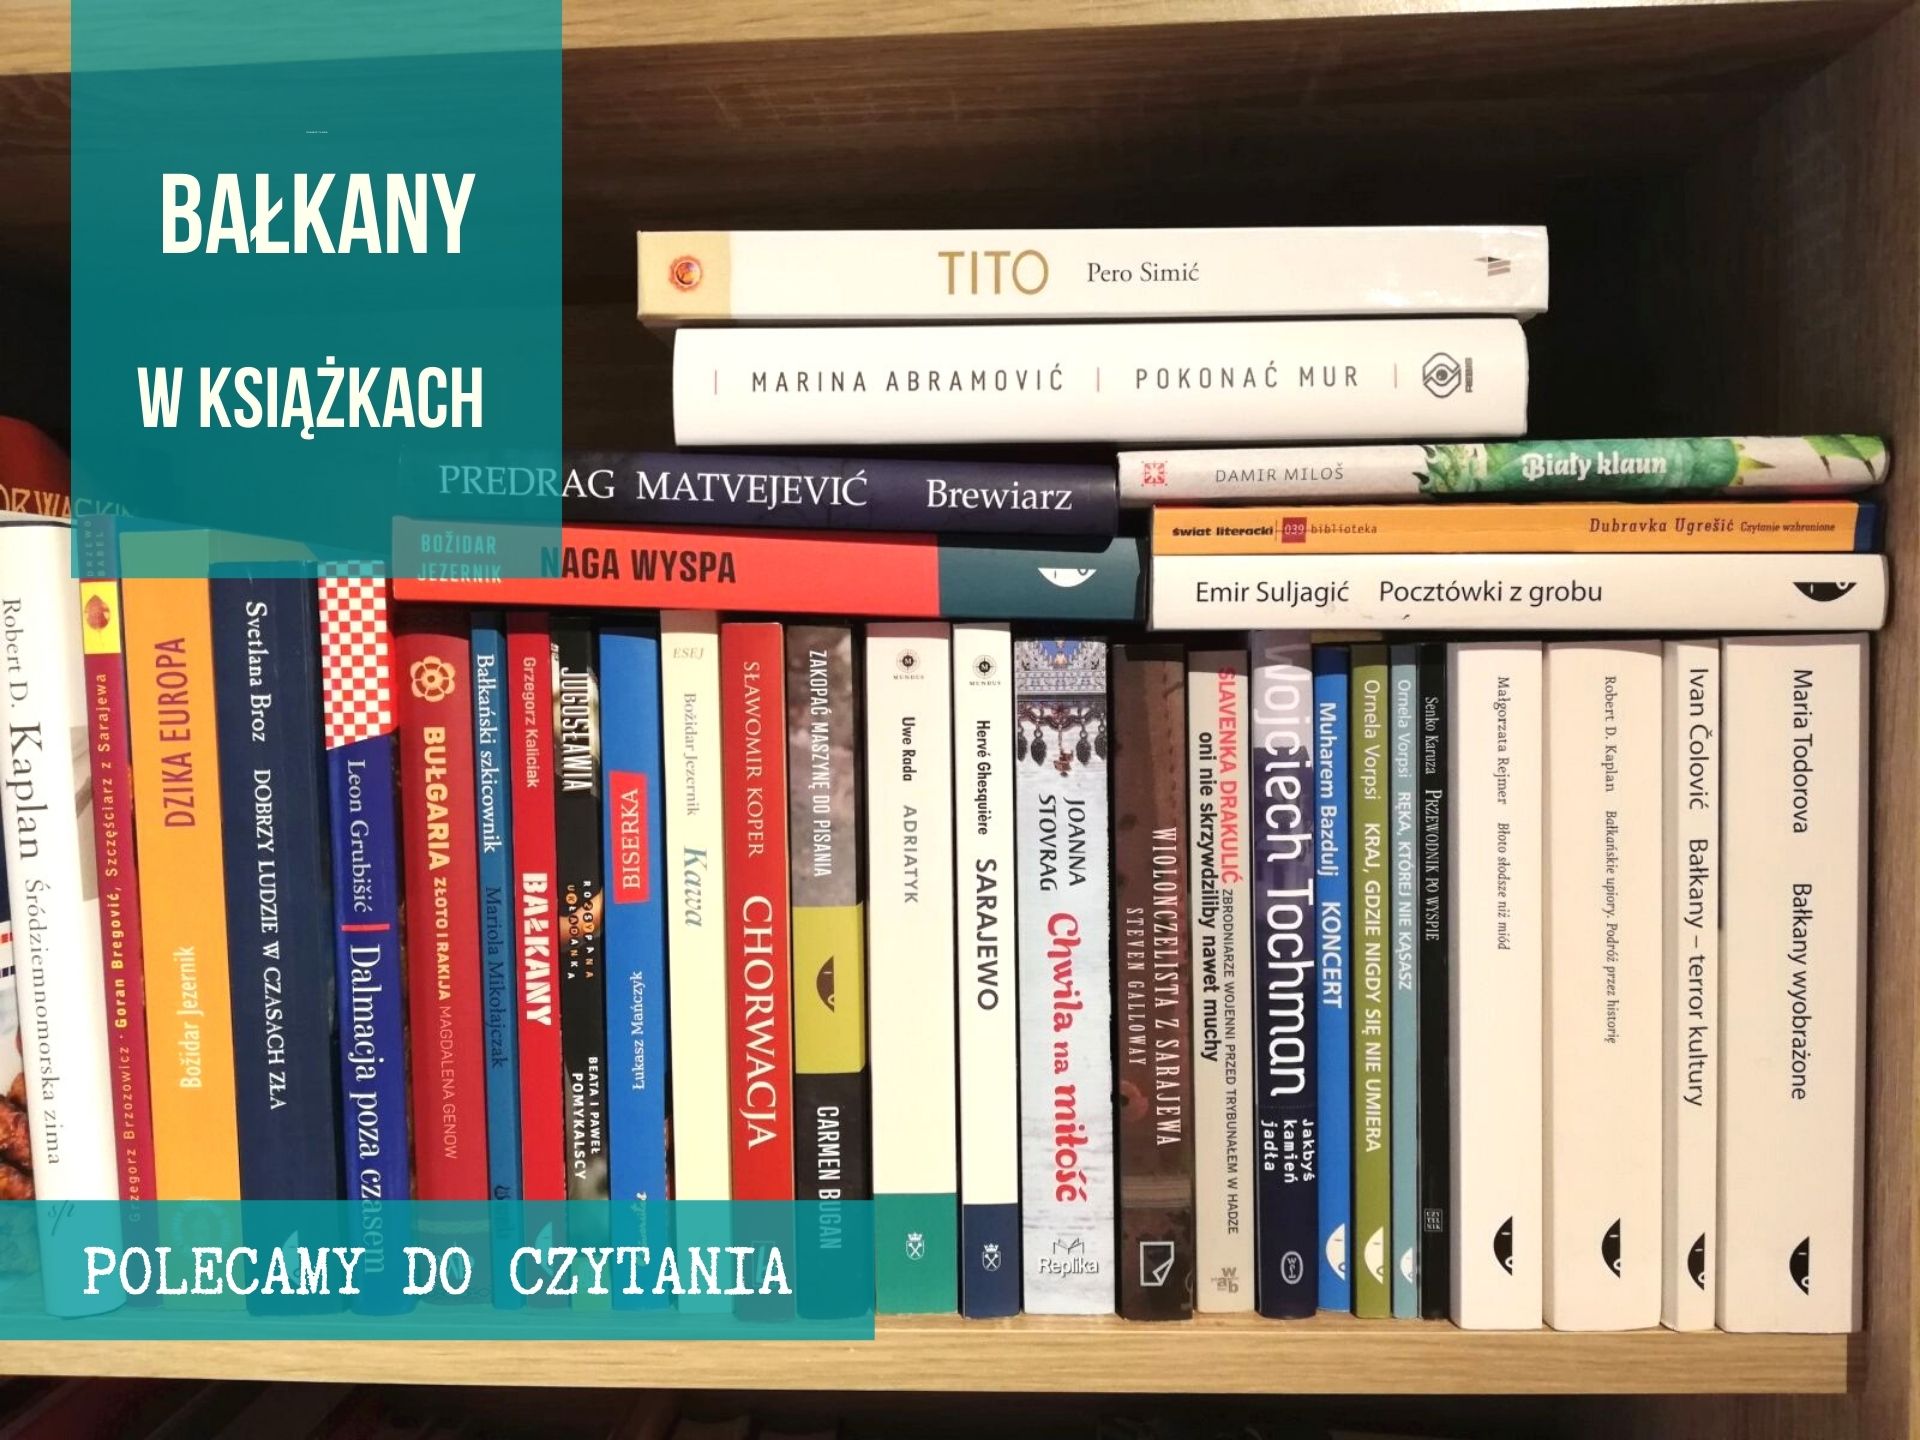 Moja bałkańska biblioteczka.